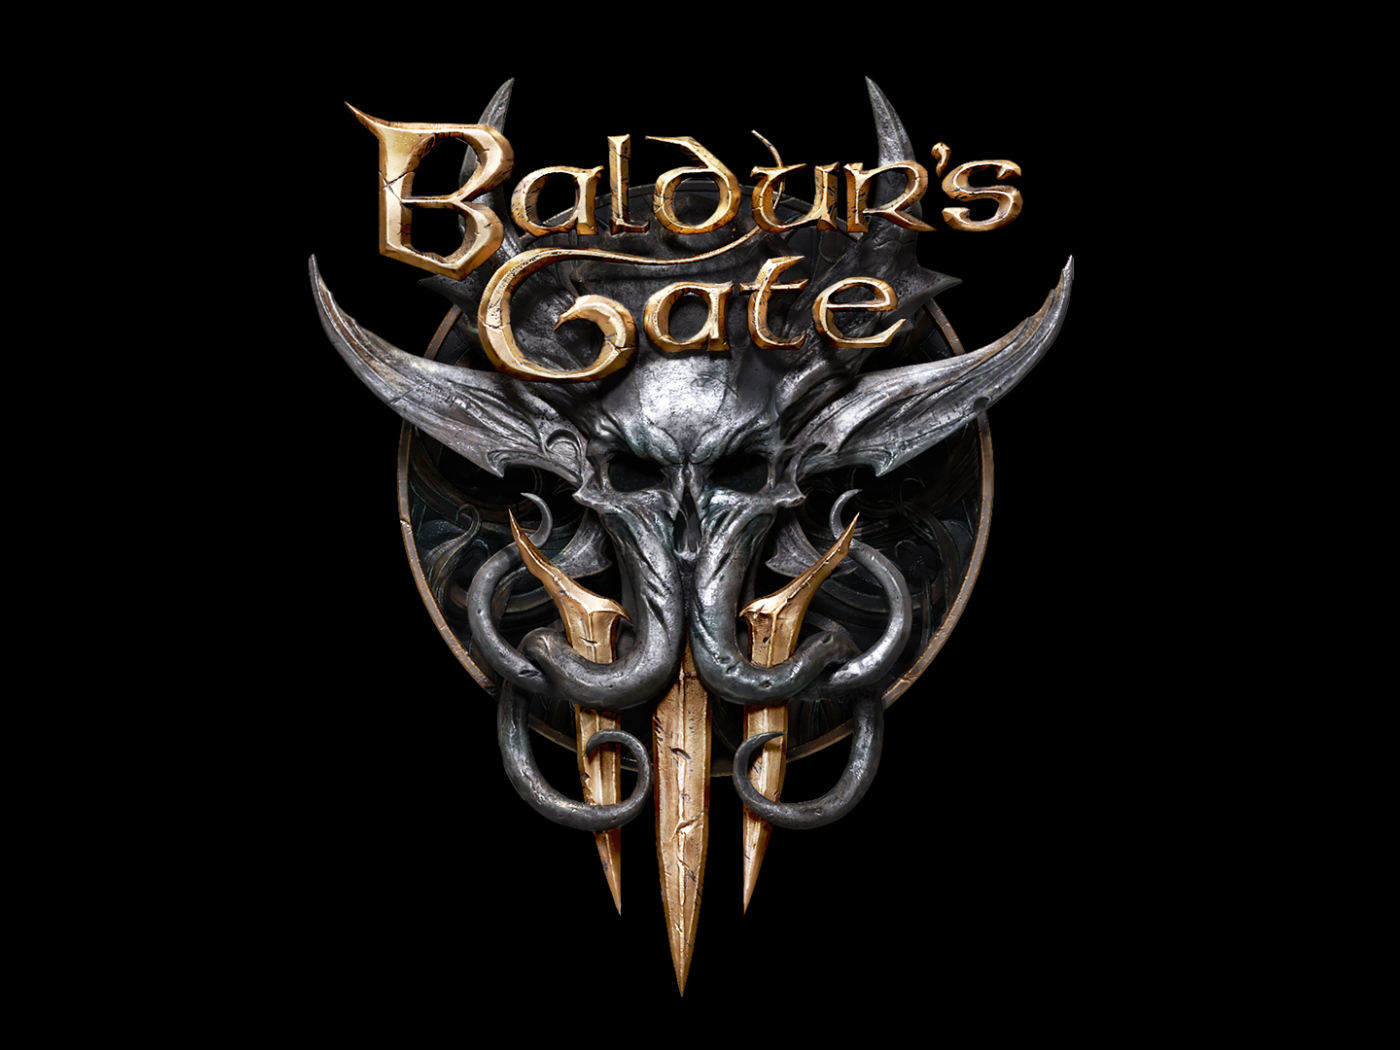 Logo of the new Baldur’s Gate III video game on a black background